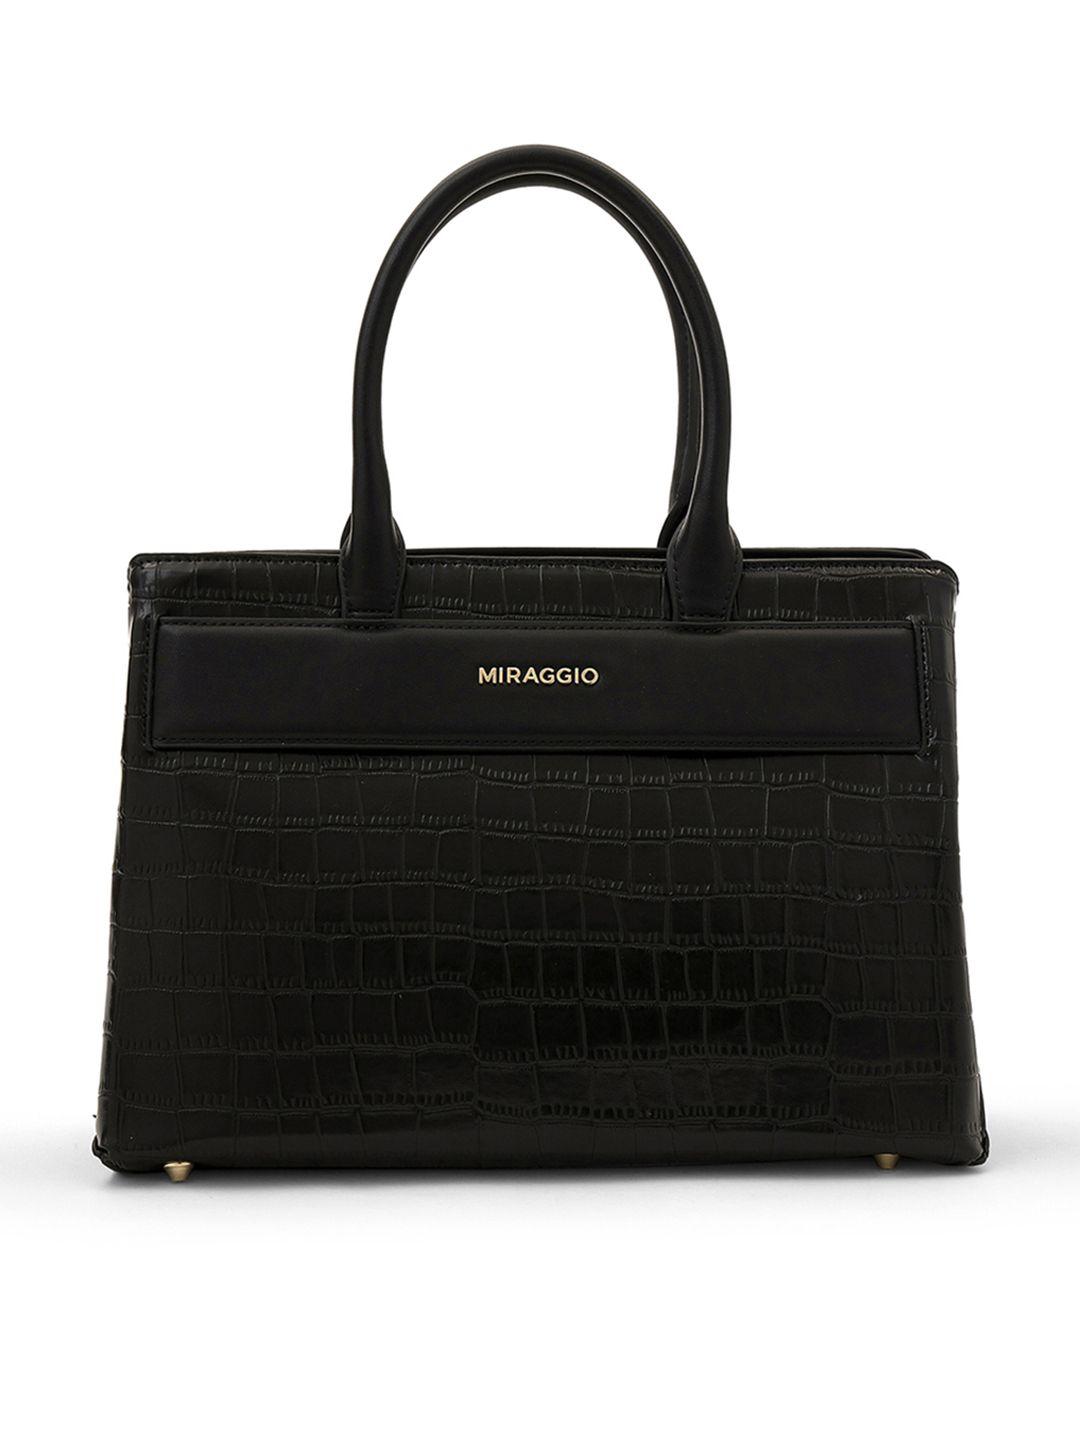 miraggio black croc-textured satchel bag with sling strap